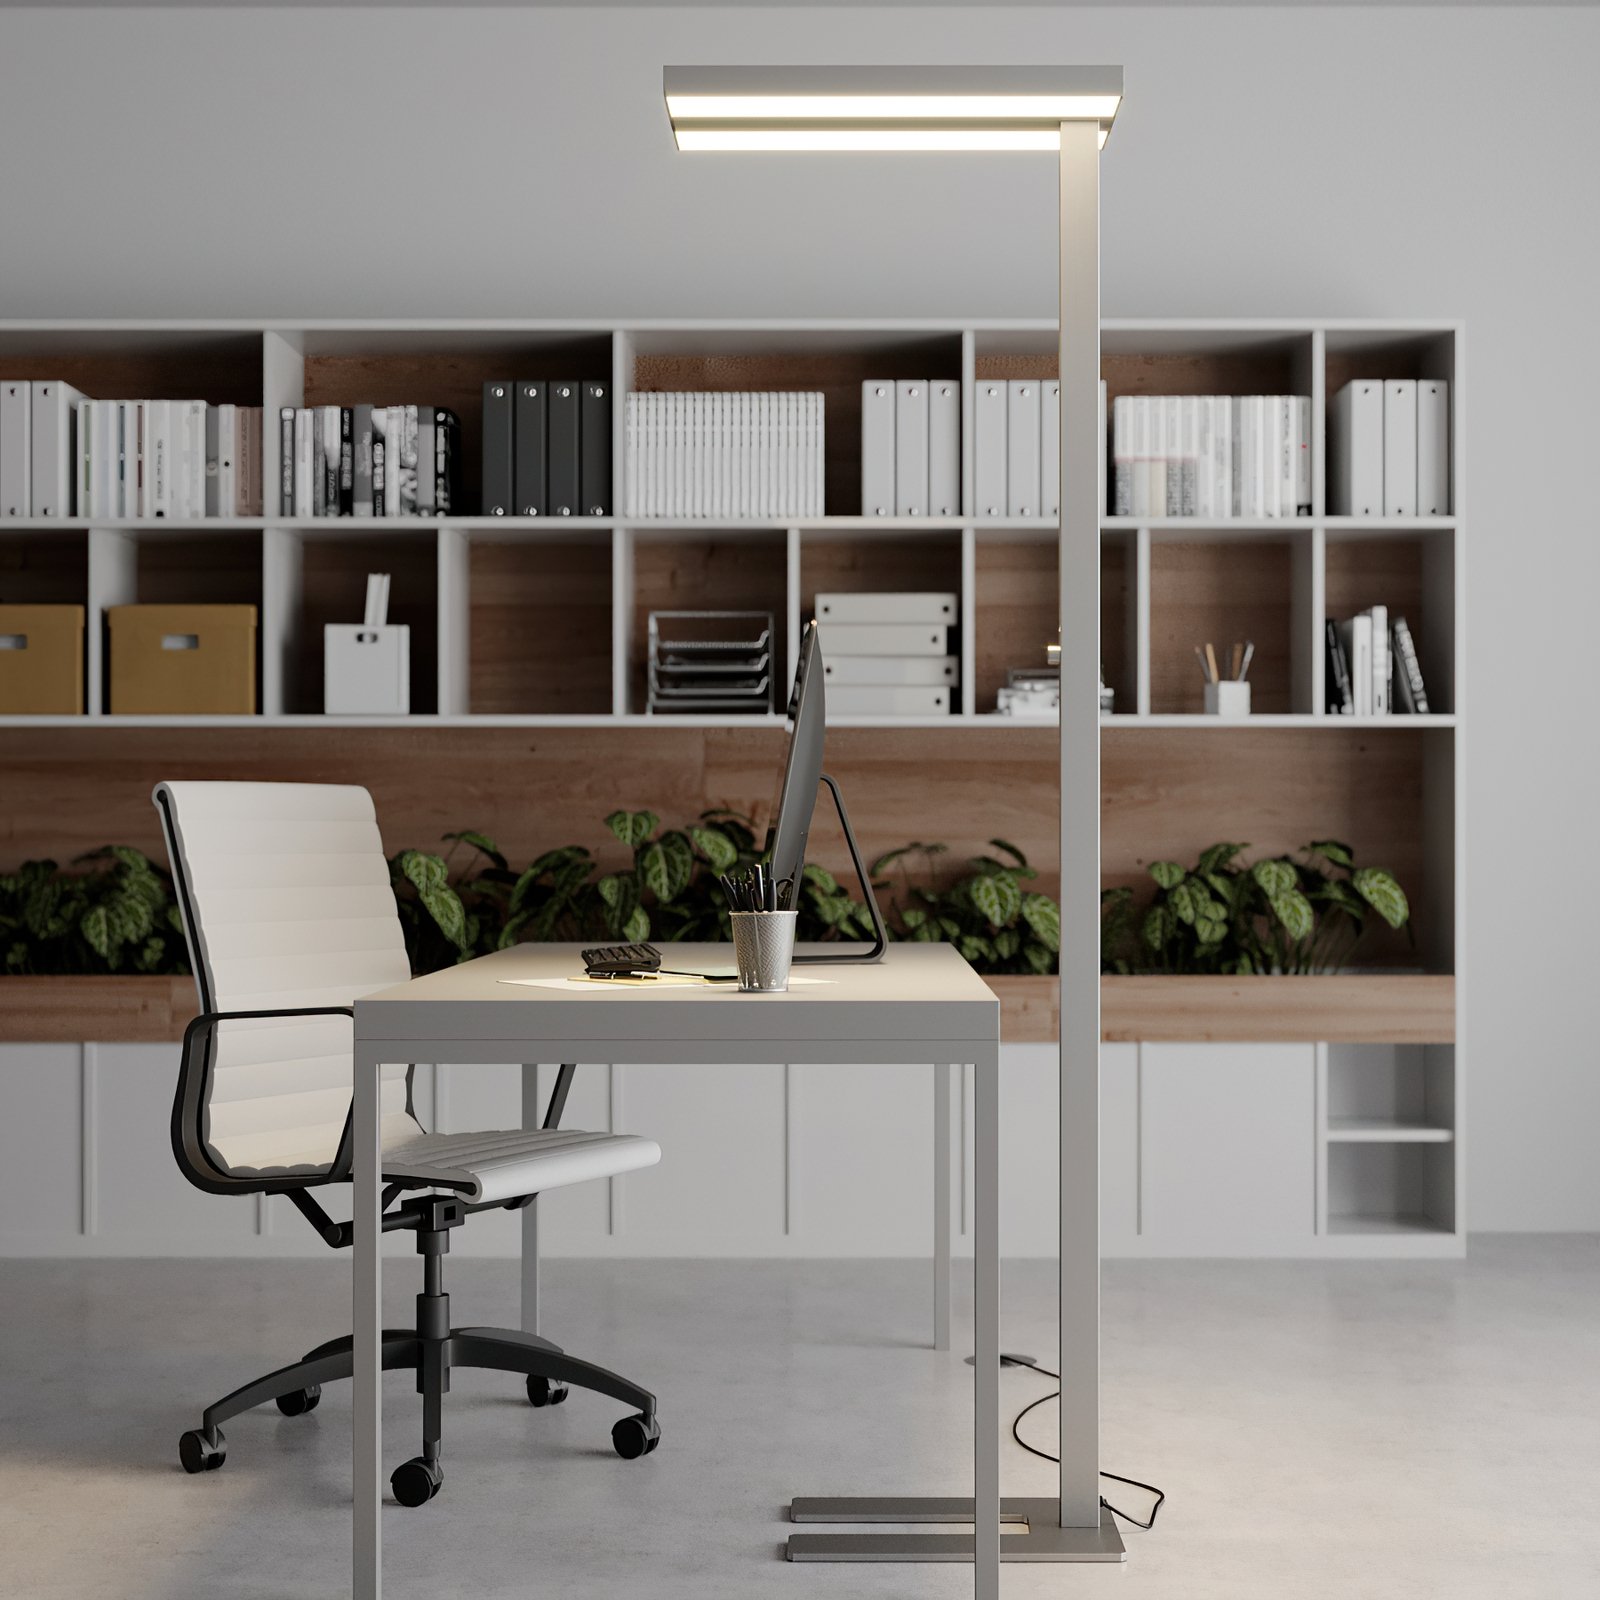 Dimmable LED office floor lamp Logan 4,000 K